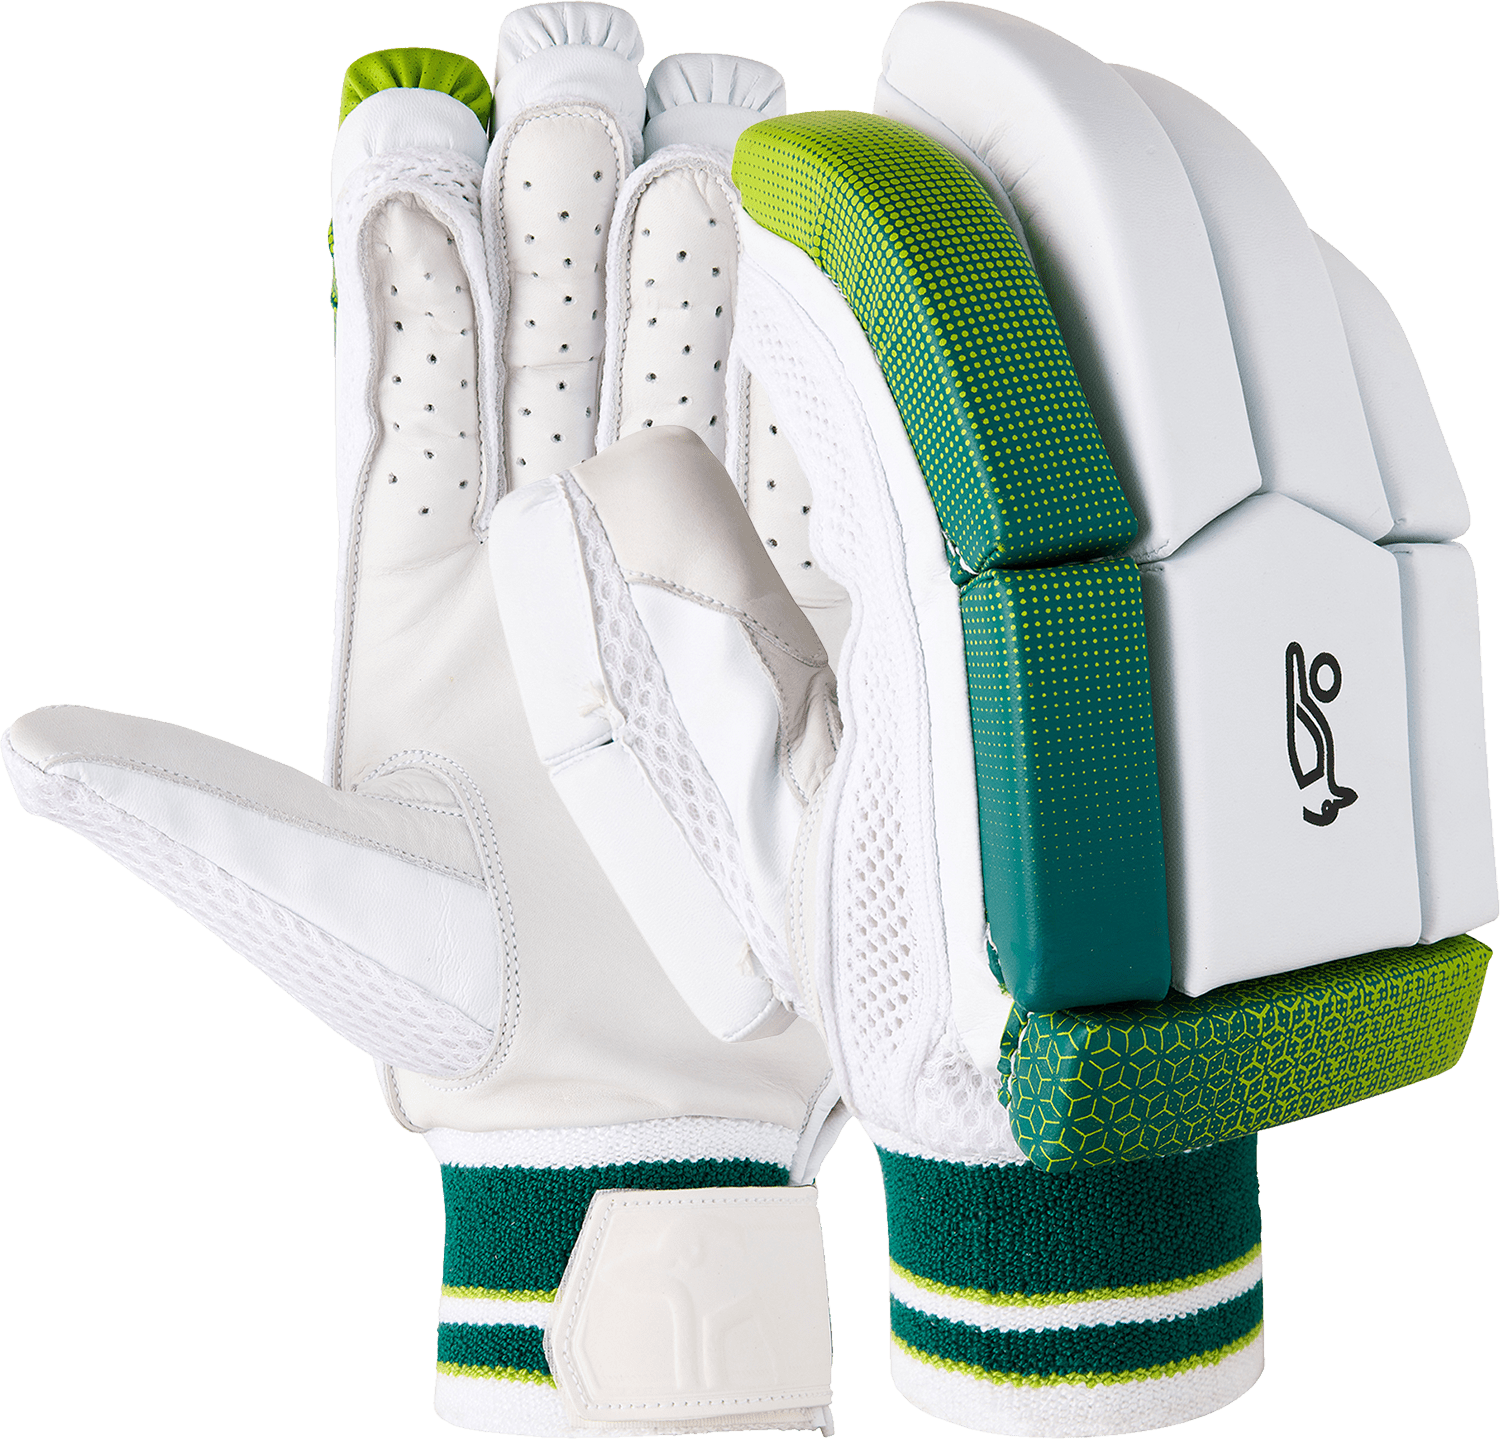 Kookaburra Gloves Kookaburra Kahuna Pro 5.0 Cricket Batting Gloves